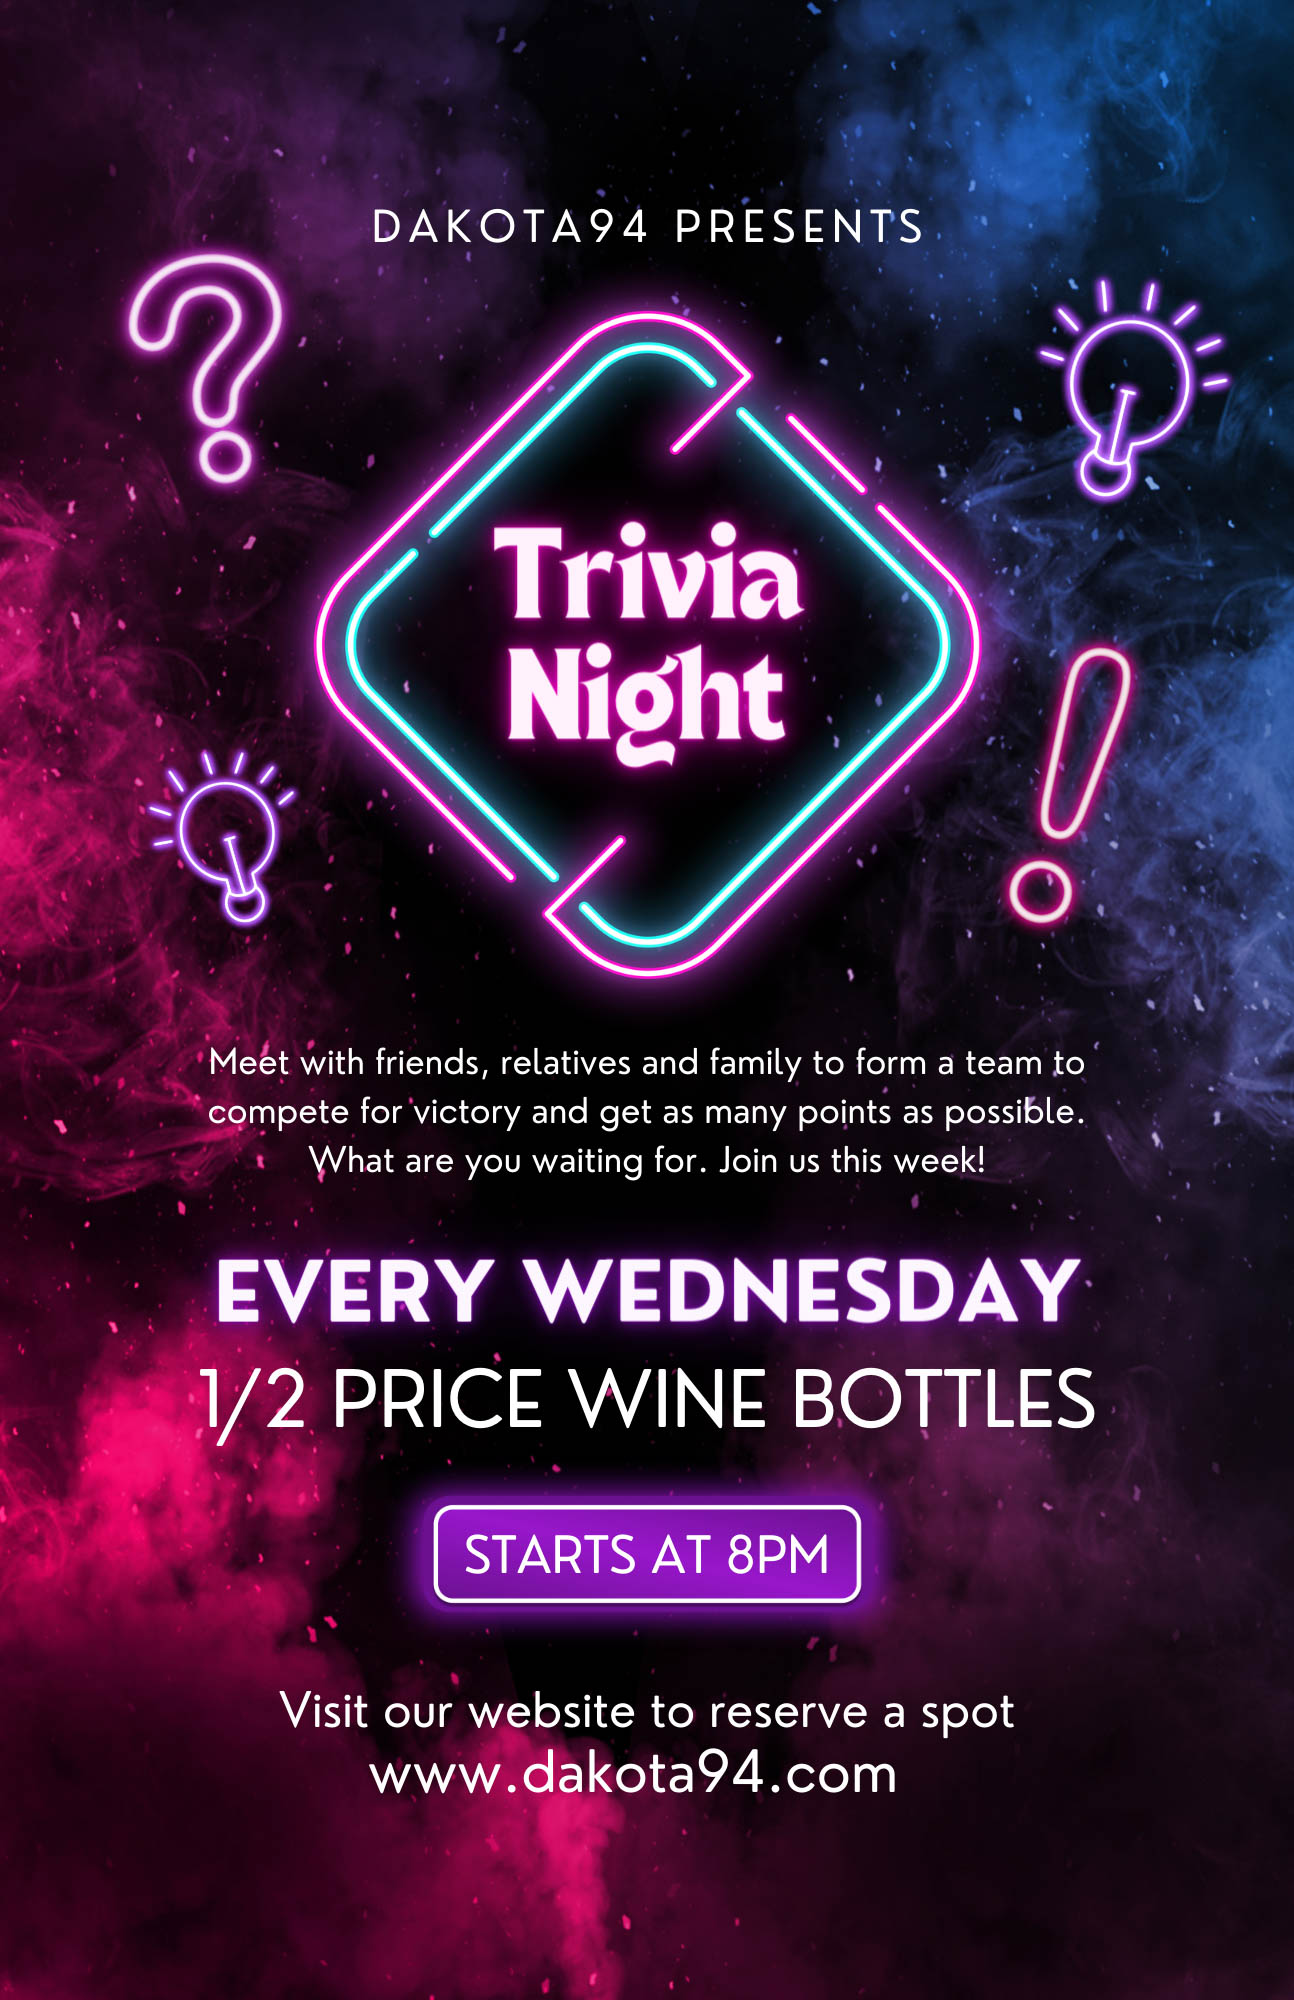 Flyer, Trivia Night, every Wednesday half price wine bottles, starts at 8 pm